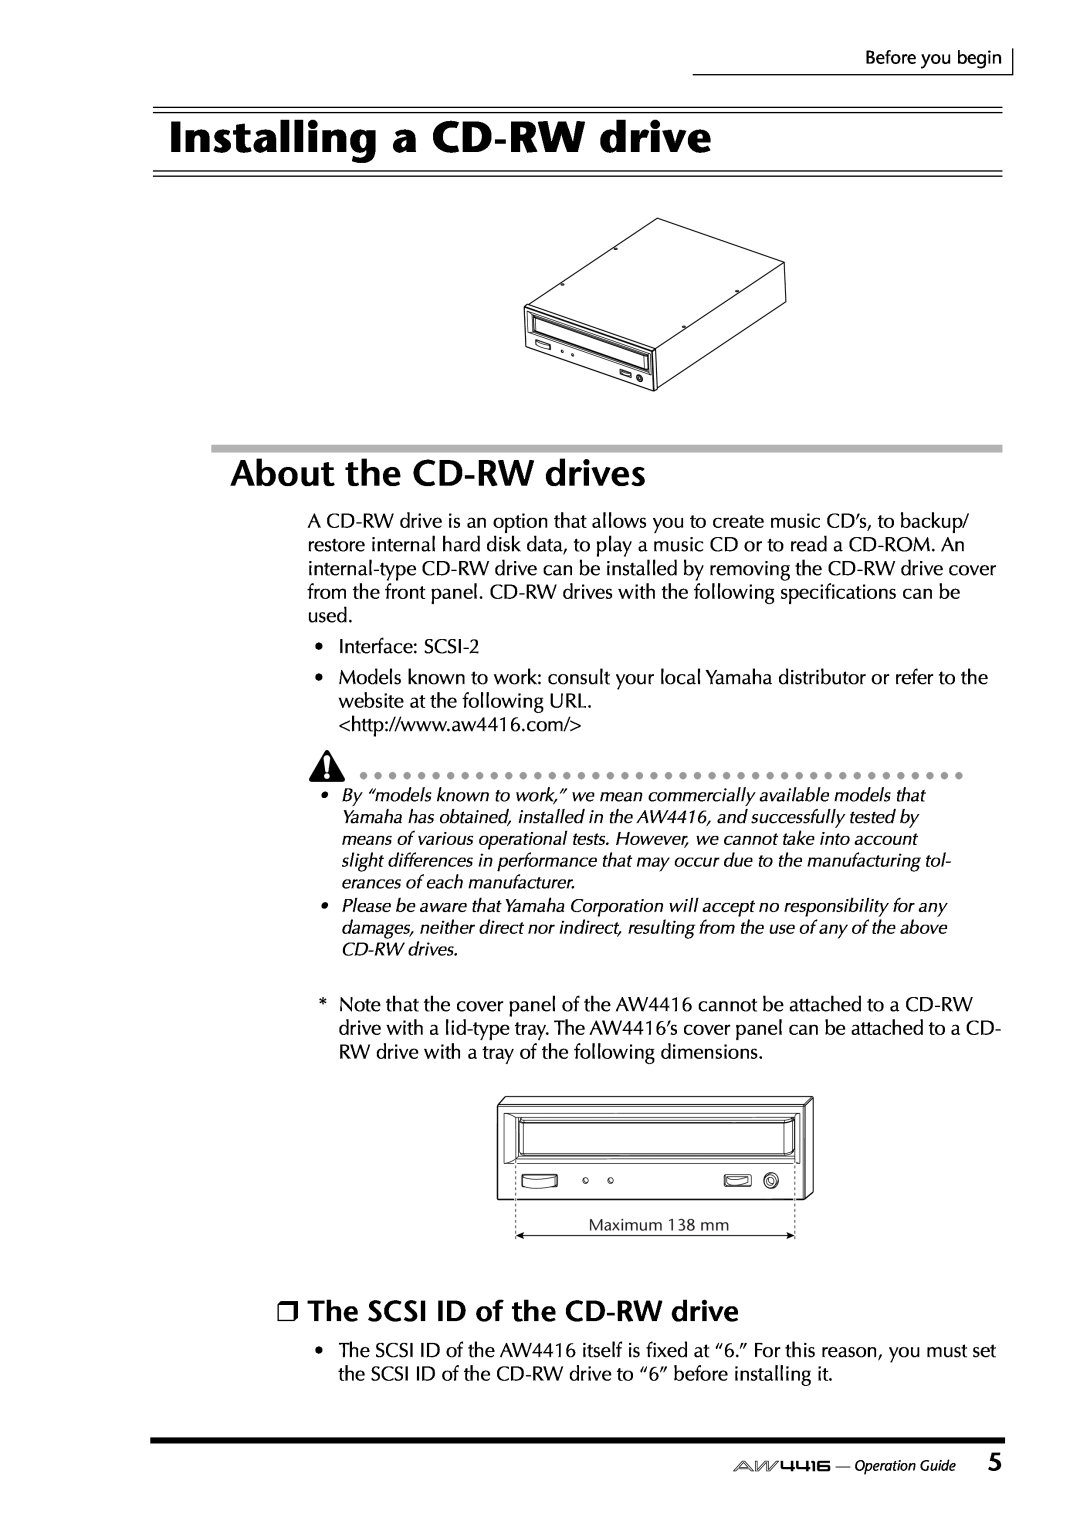 Yamaha AW4416 manual Installing a CD-RWdrive, About the CD-RWdrives, The SCSI ID of the CD-RWdrive 